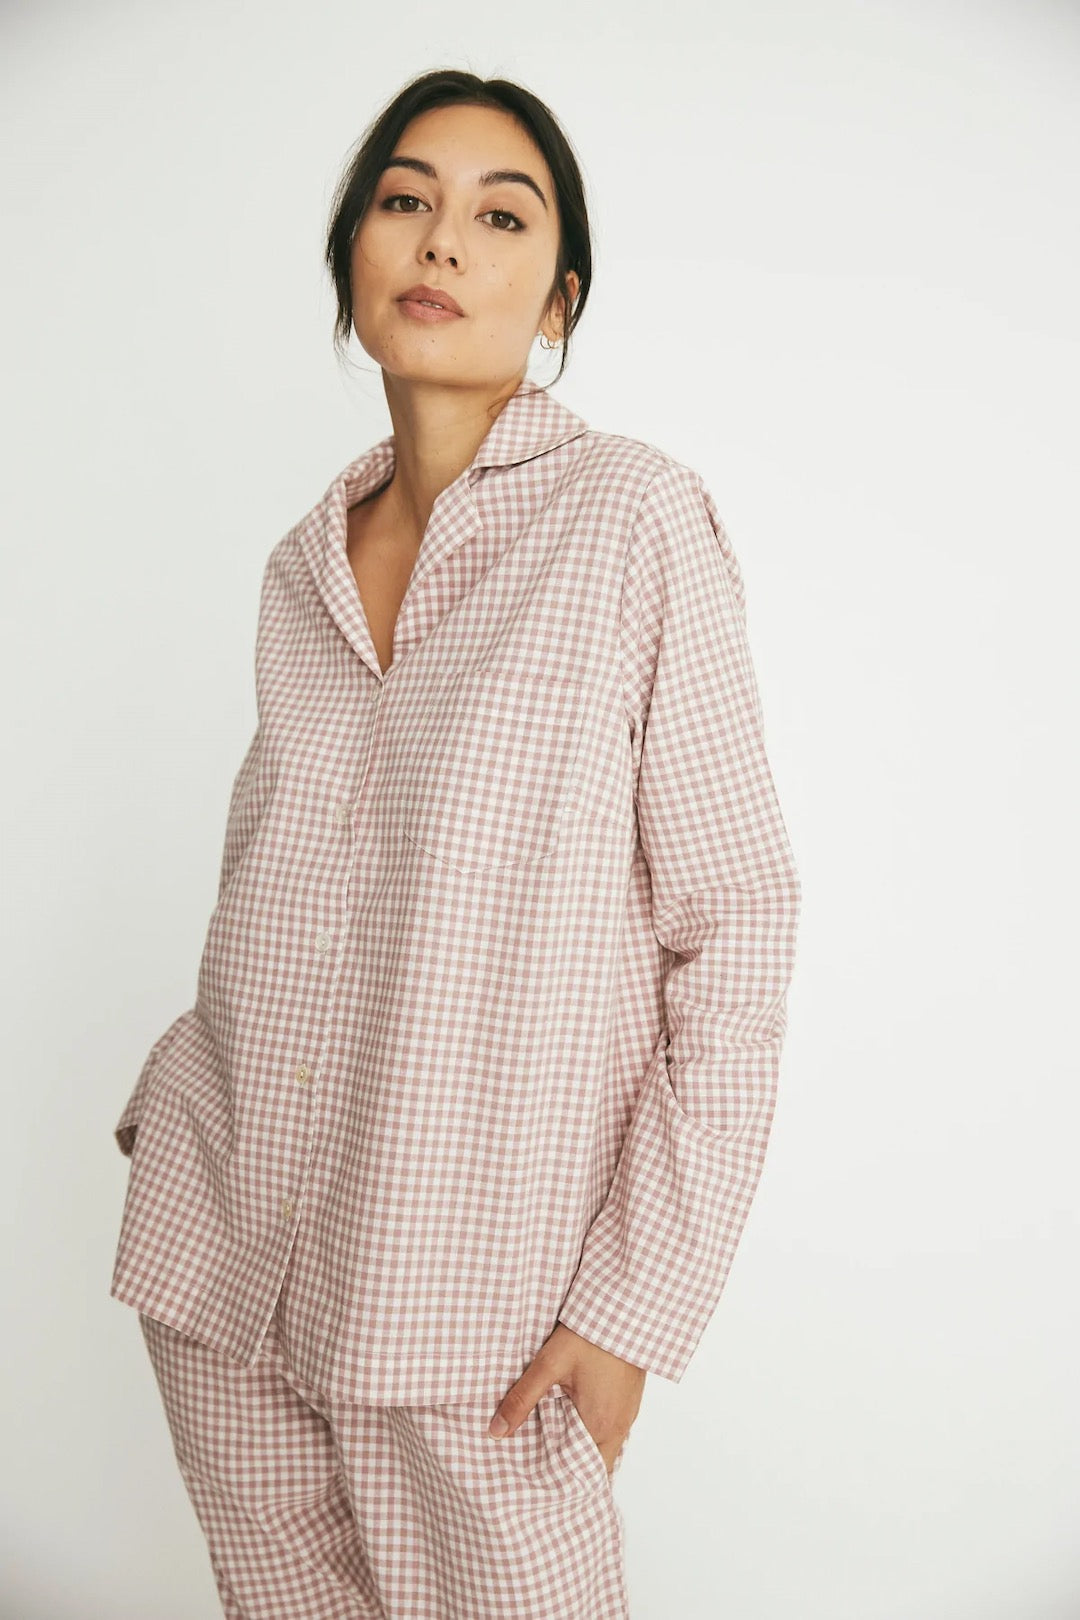 The model is wearing a general sleep Classic Set - Rose Gingham pyjama set.